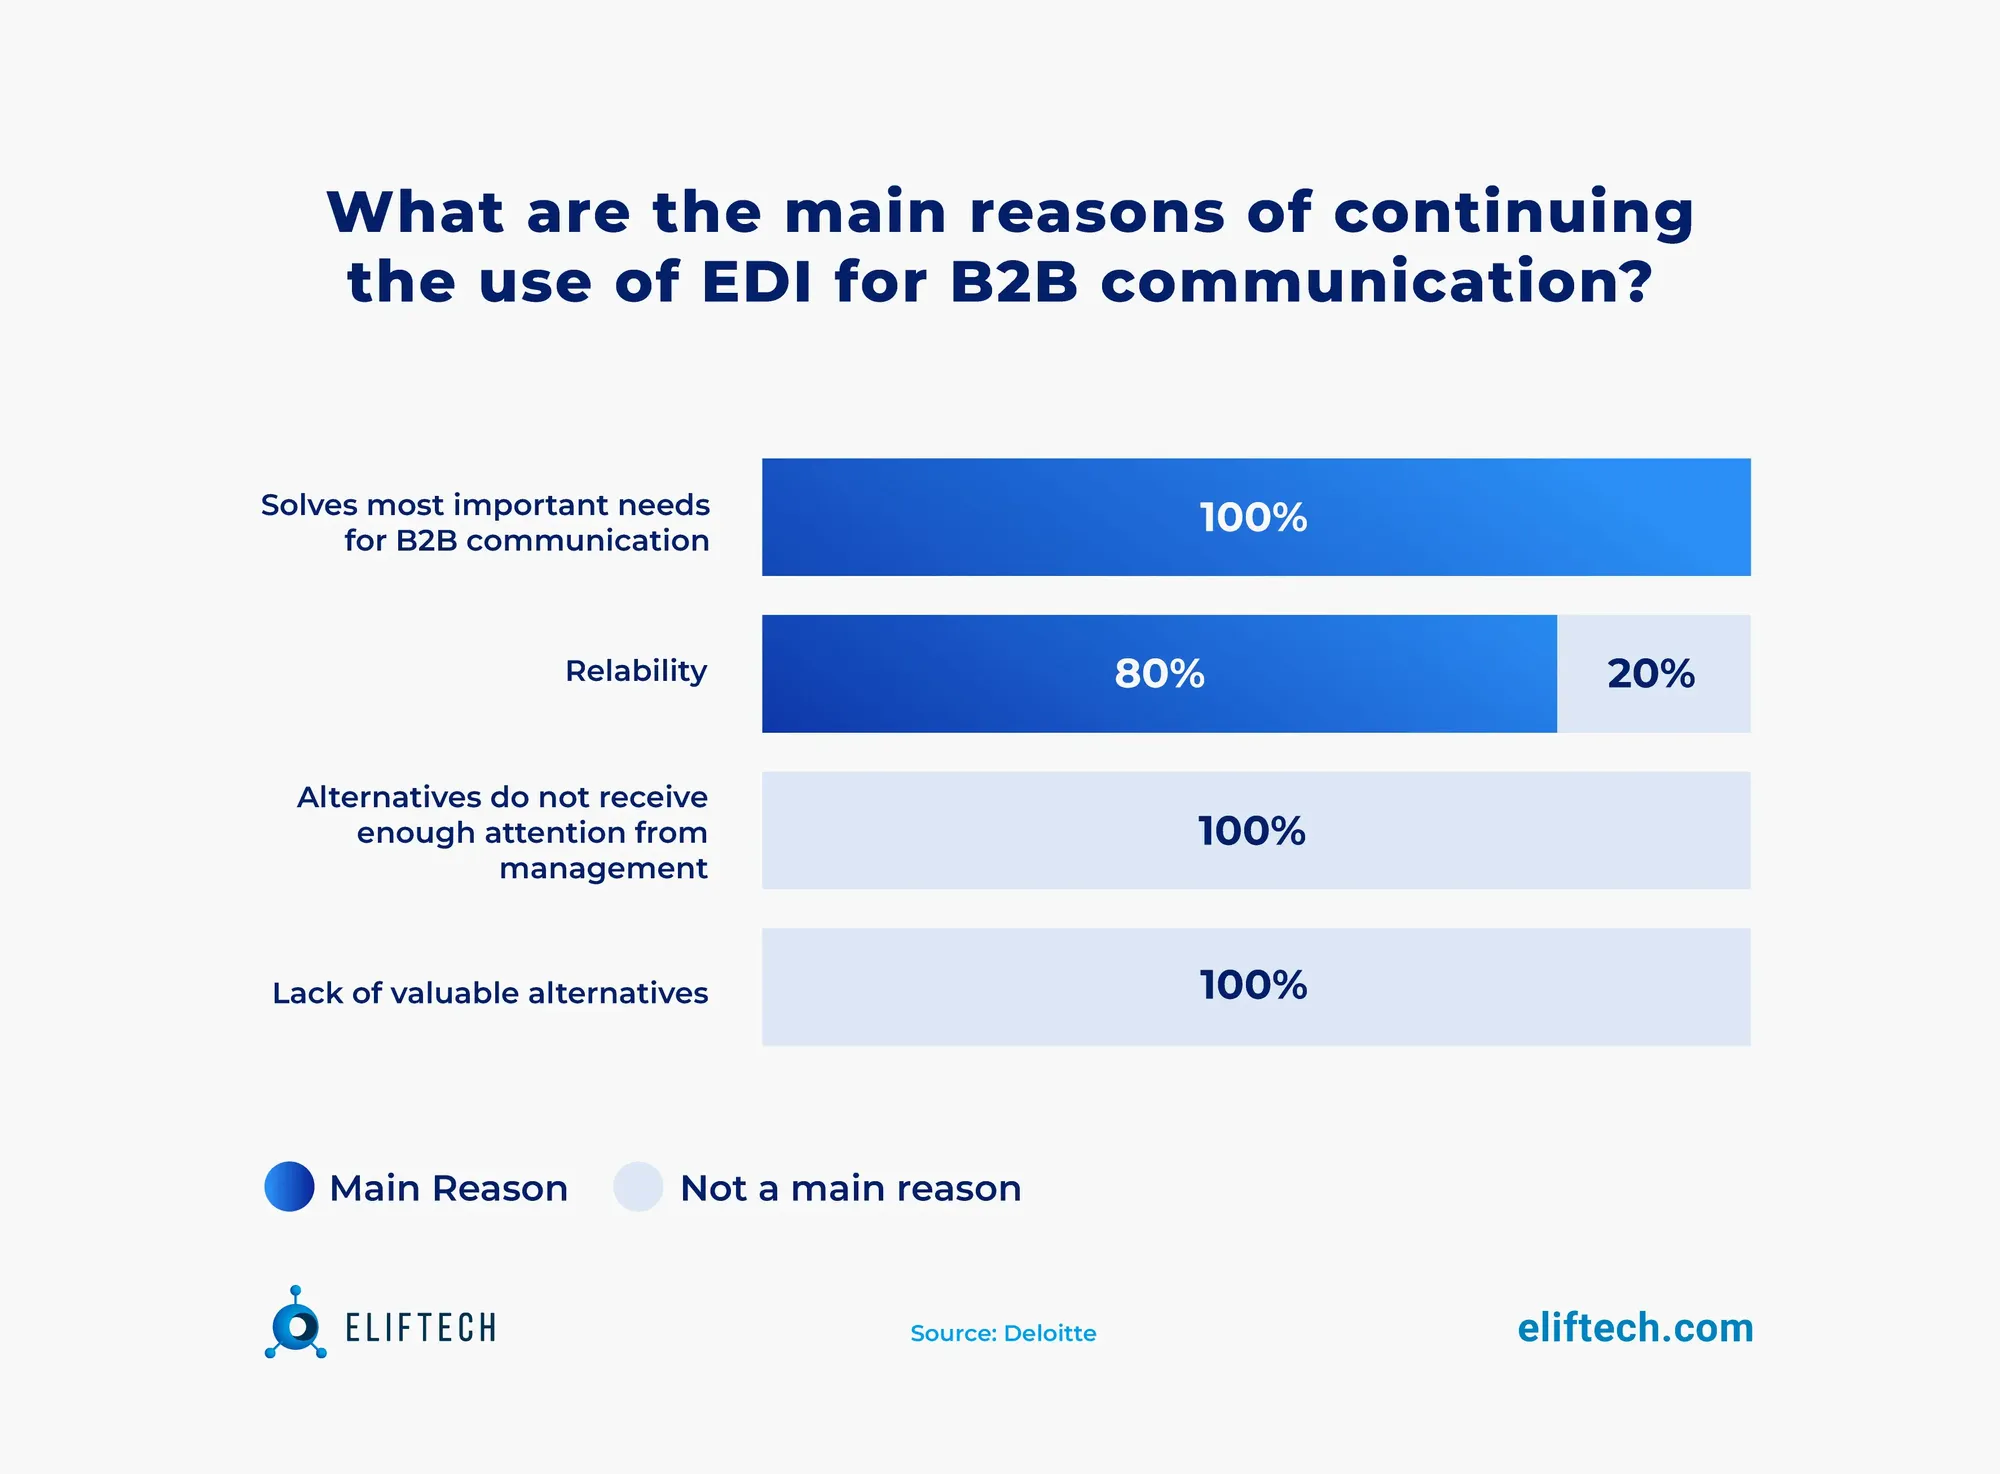 The main reasons for using EDI for B2B communication